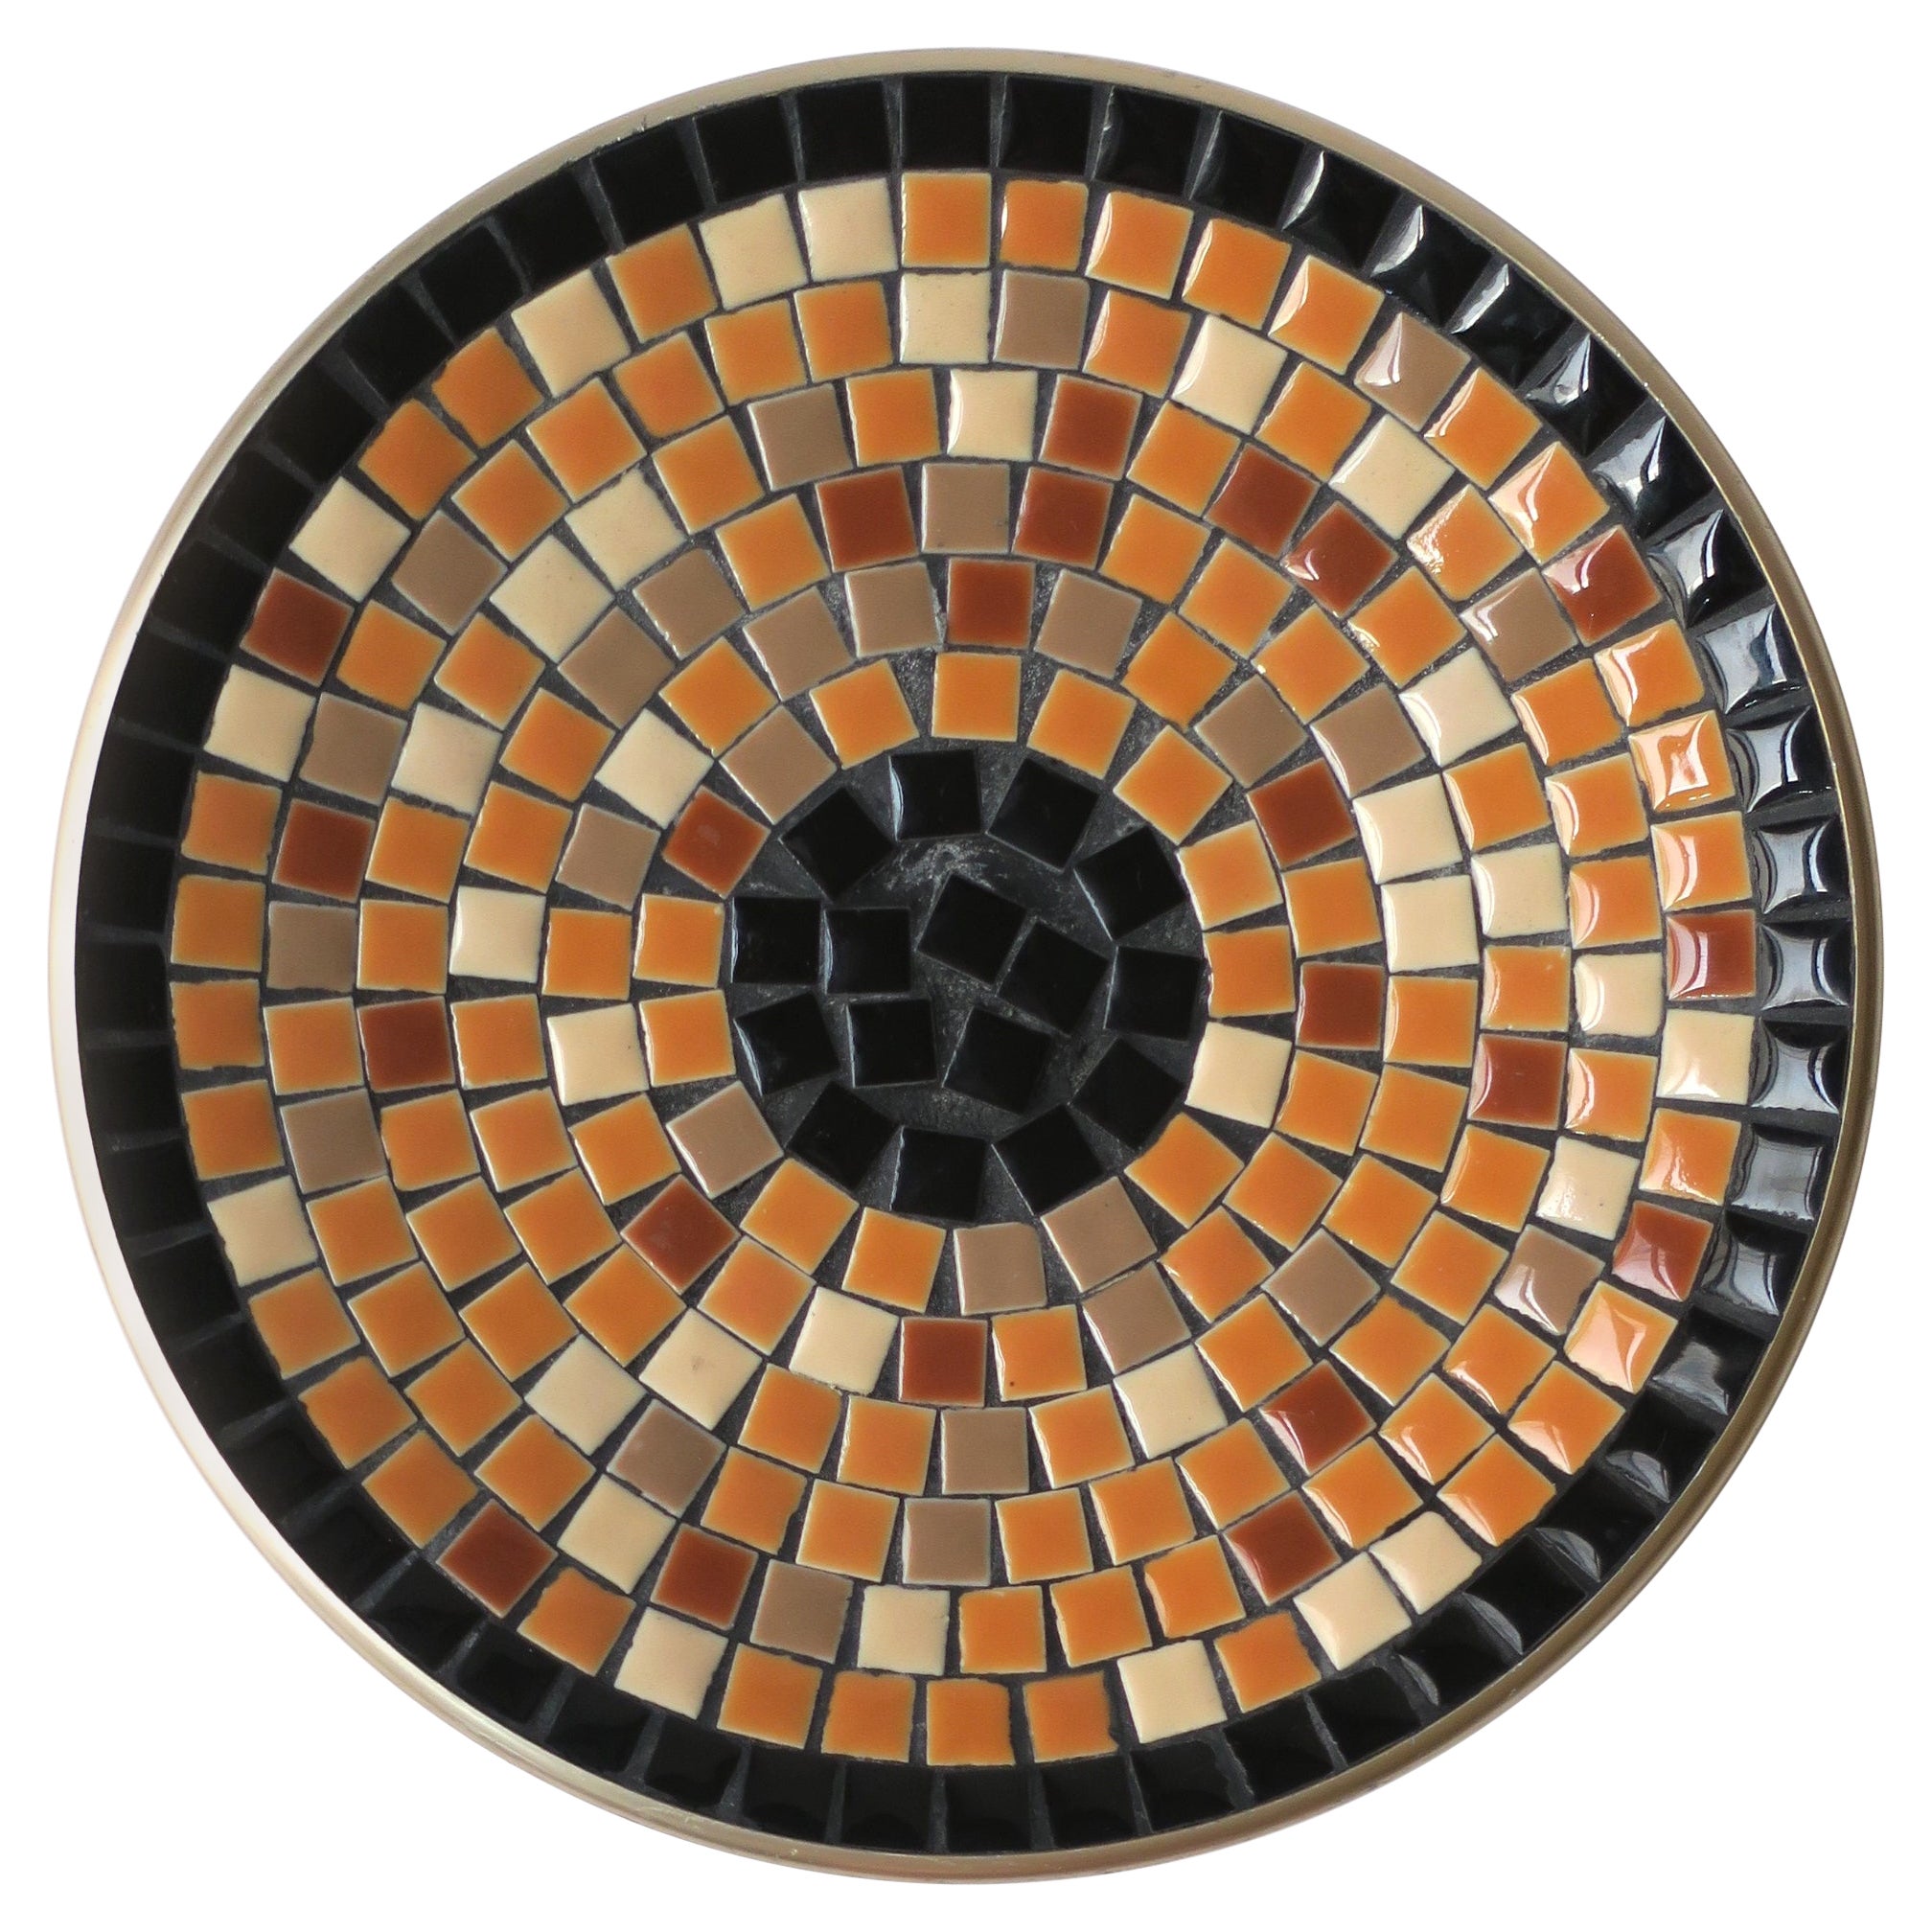 Mosaic Ceramic Tile Dish Vide-Poche Catchall Black and Terracotta, circa 1960s